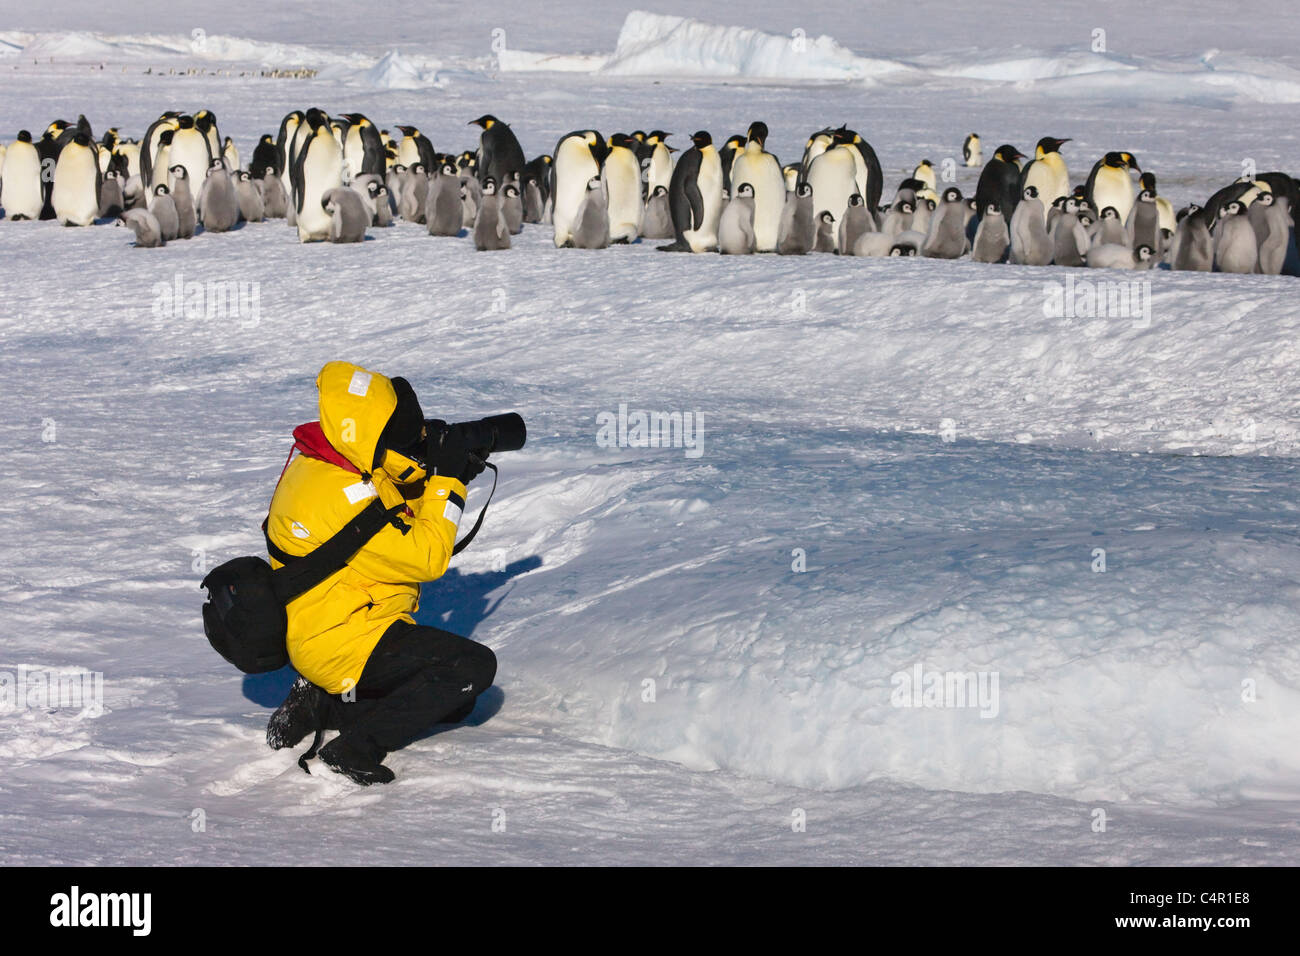 Touristen fotografieren Kaiserpinguine auf Eis, Snow Hill Island, Antarktis Stockfoto